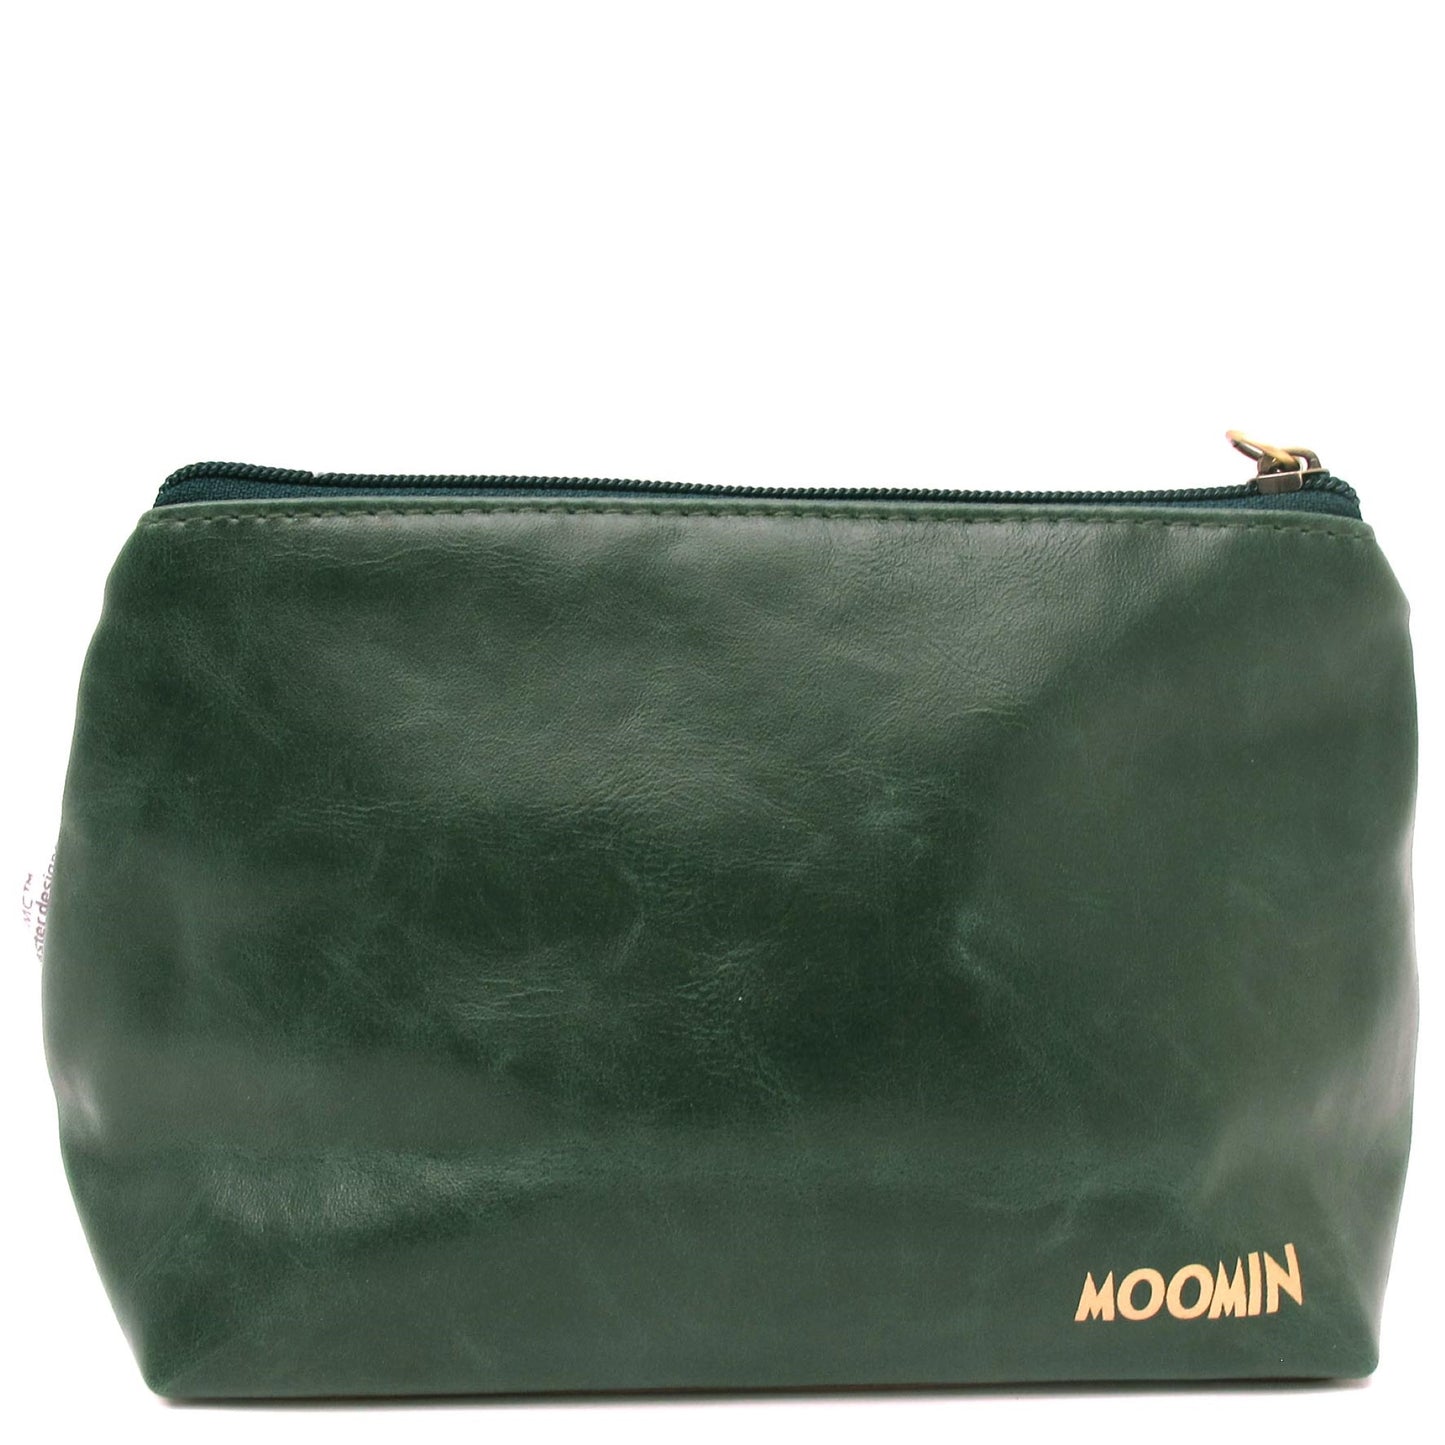 Moomin "Dangerous Journey" Makeup Bag